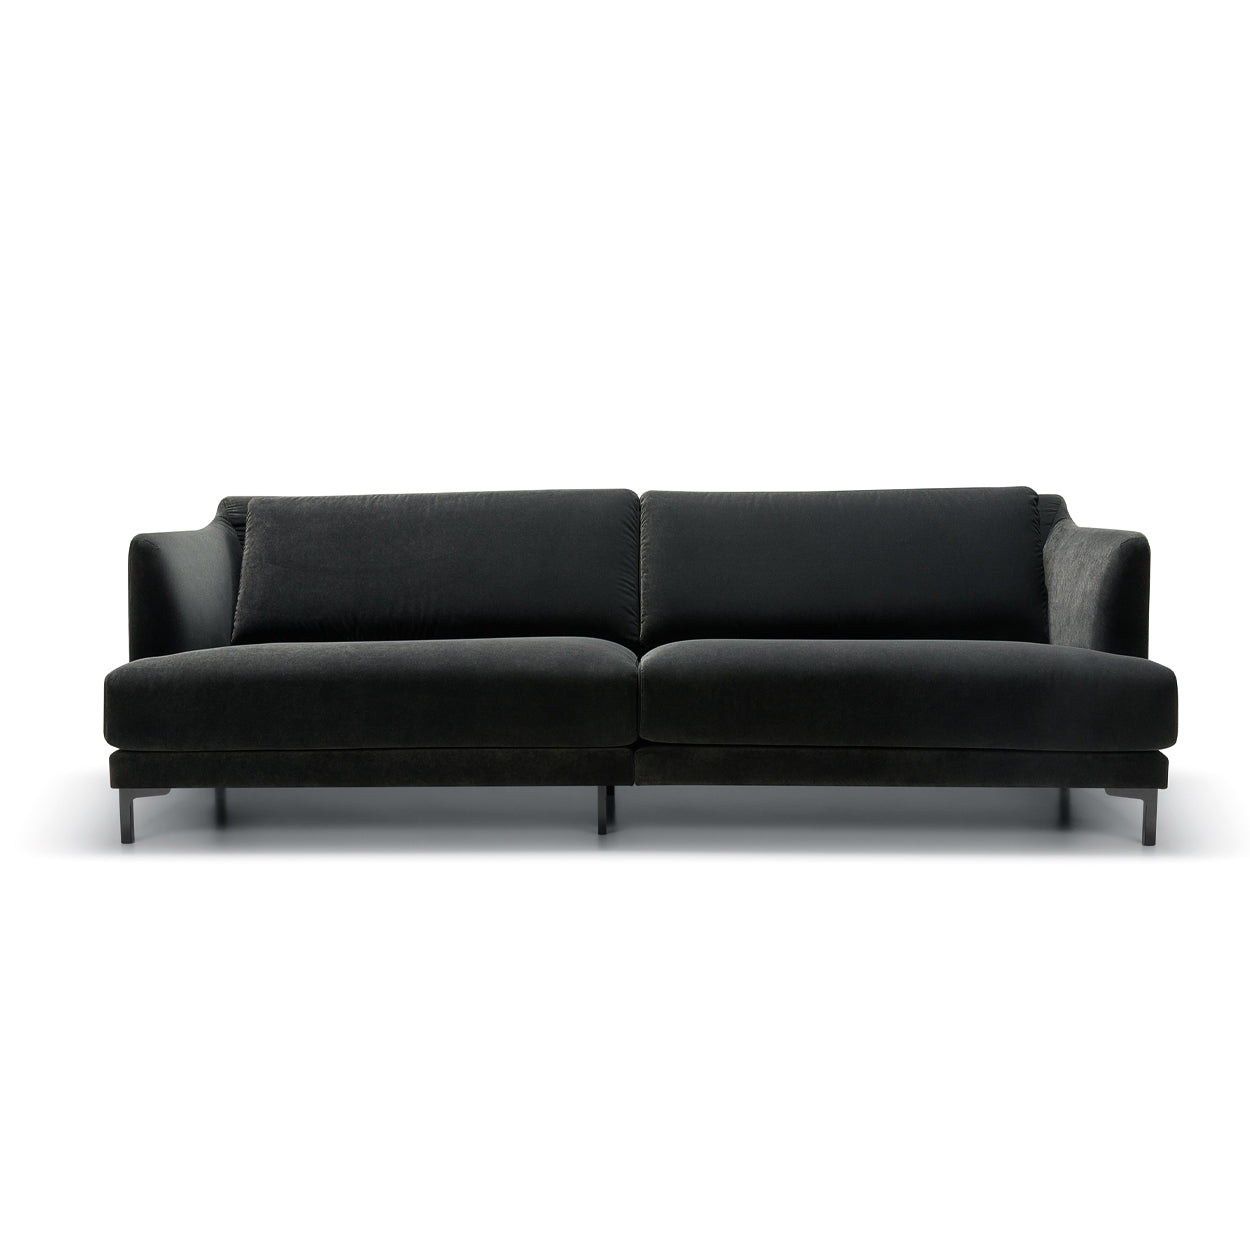 Extra large Split Sofa - lux - Wren Sofa